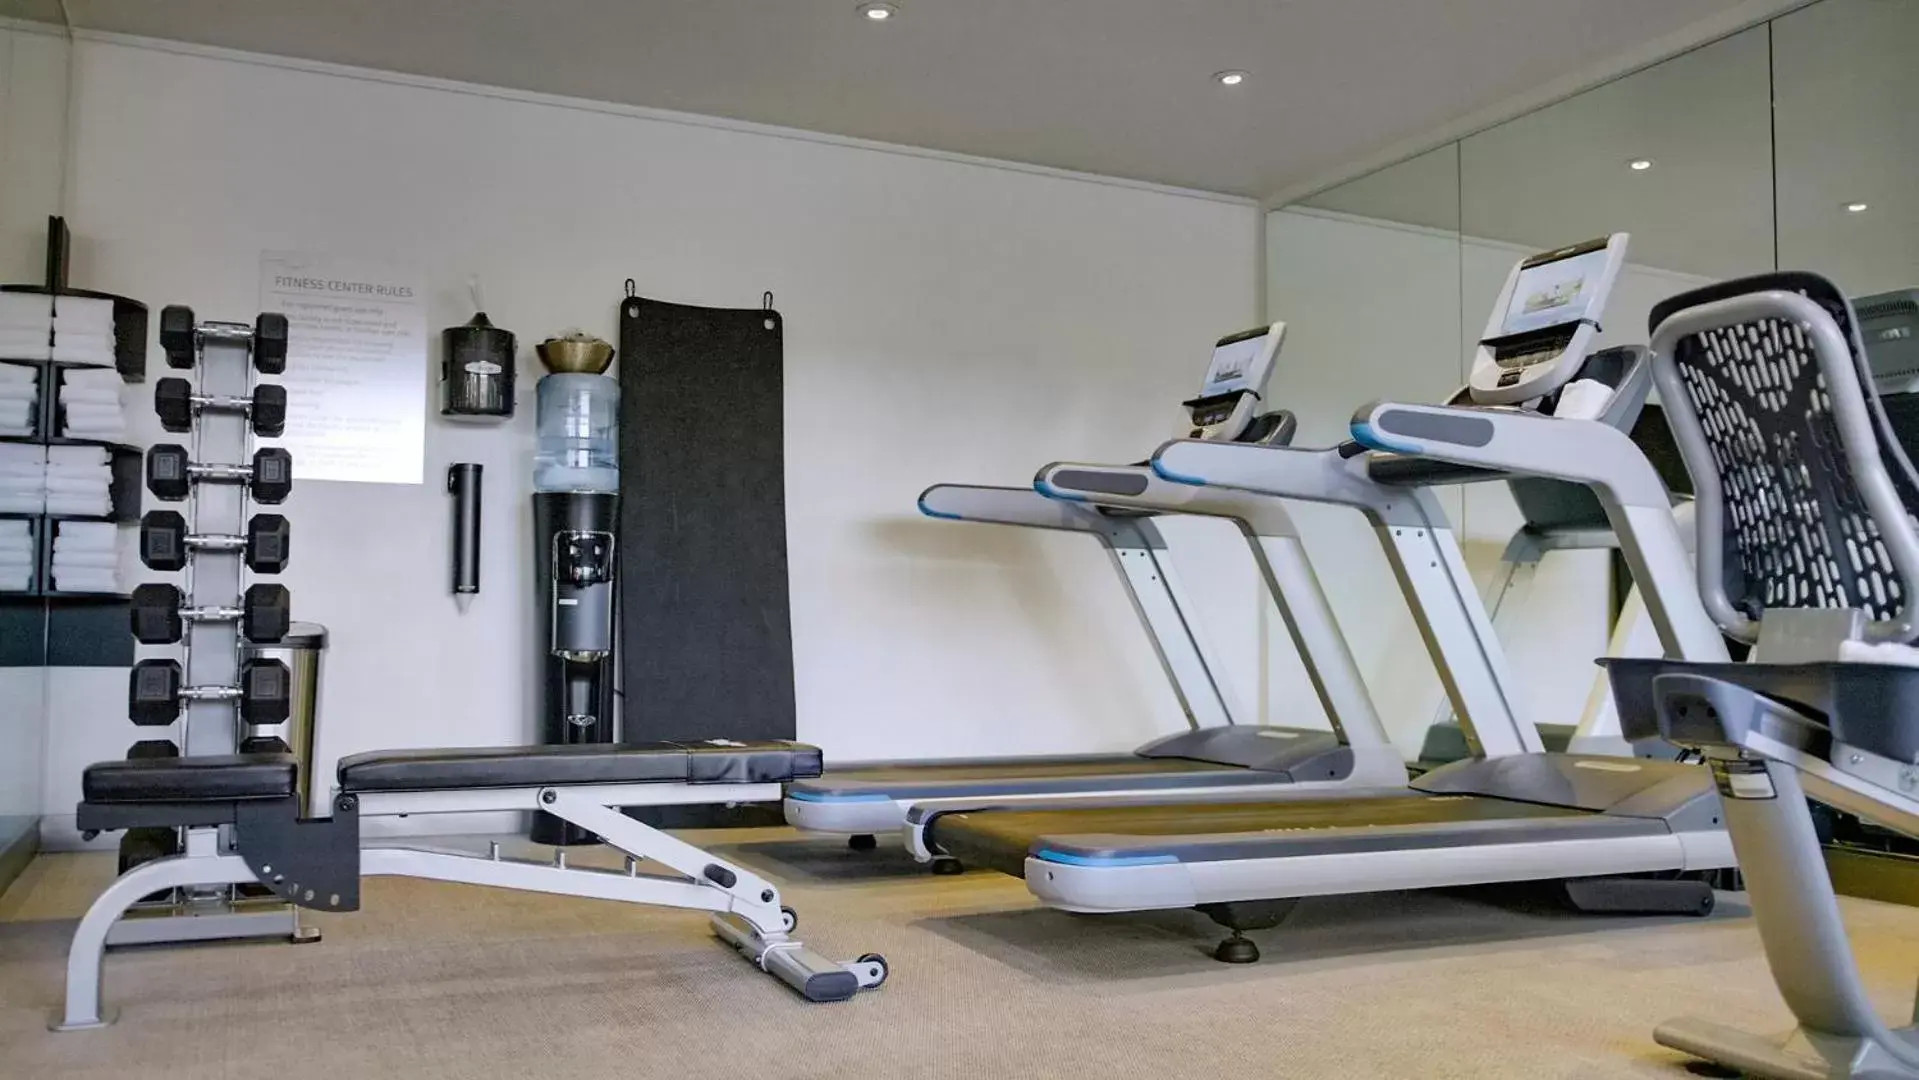 Fitness centre/facilities, Fitness Center/Facilities in The Nest Hotel Palo Alto